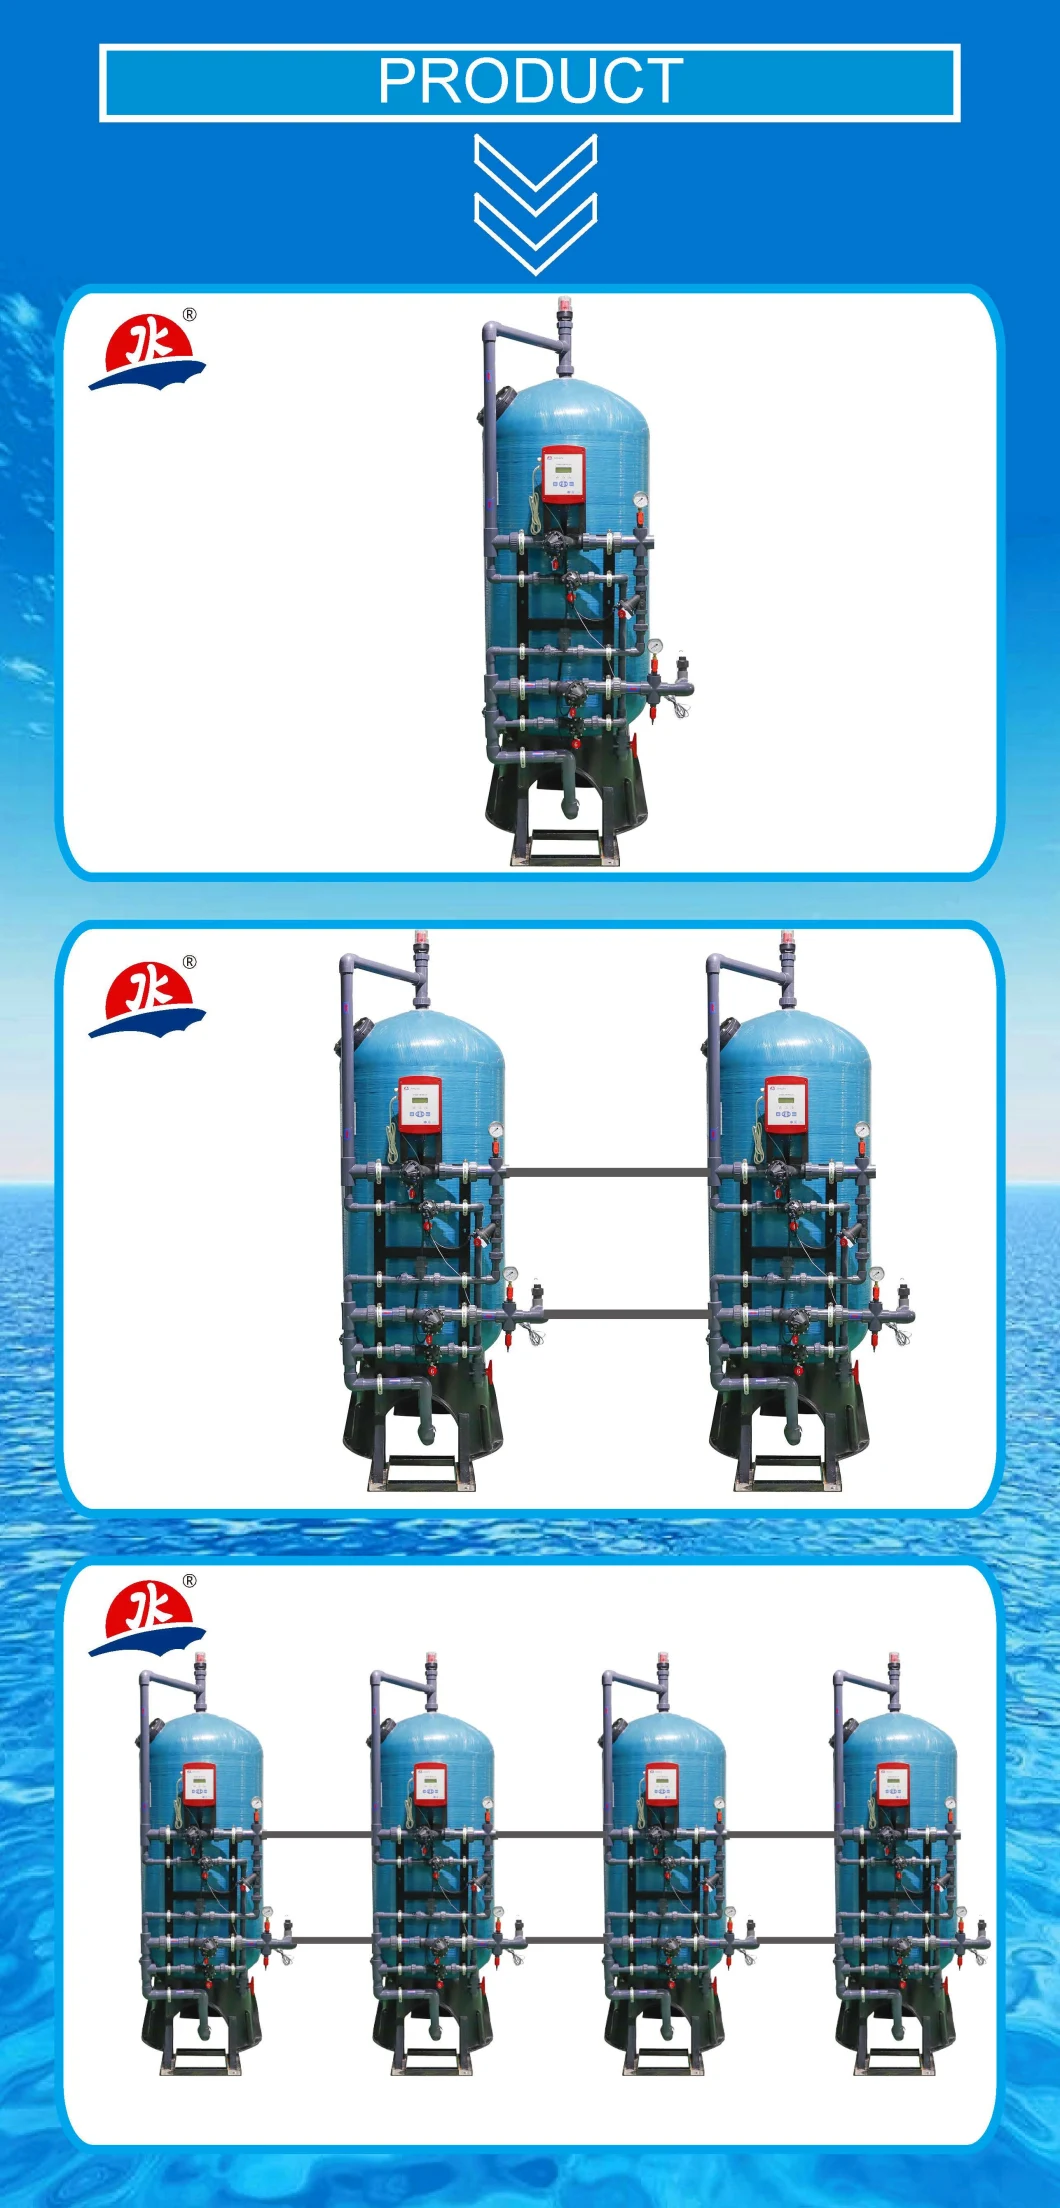 Jkmatic Industrial Water Multi-Media Filter and Softener Pressure Tanks for Water Softener